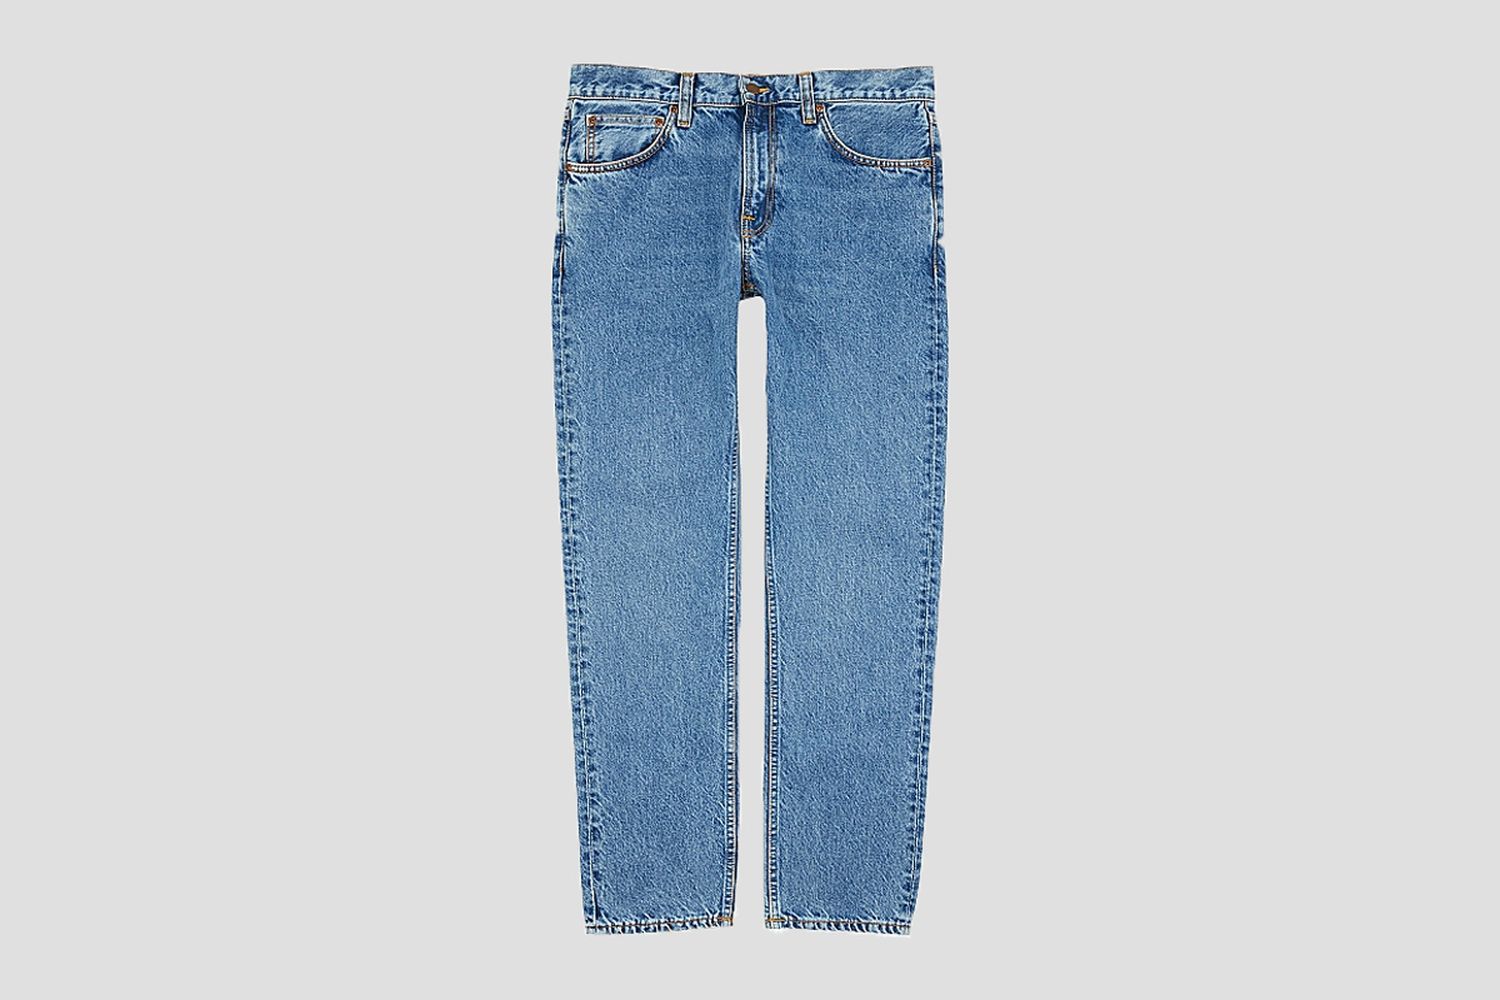 Gritty Jackson Blue Jeans